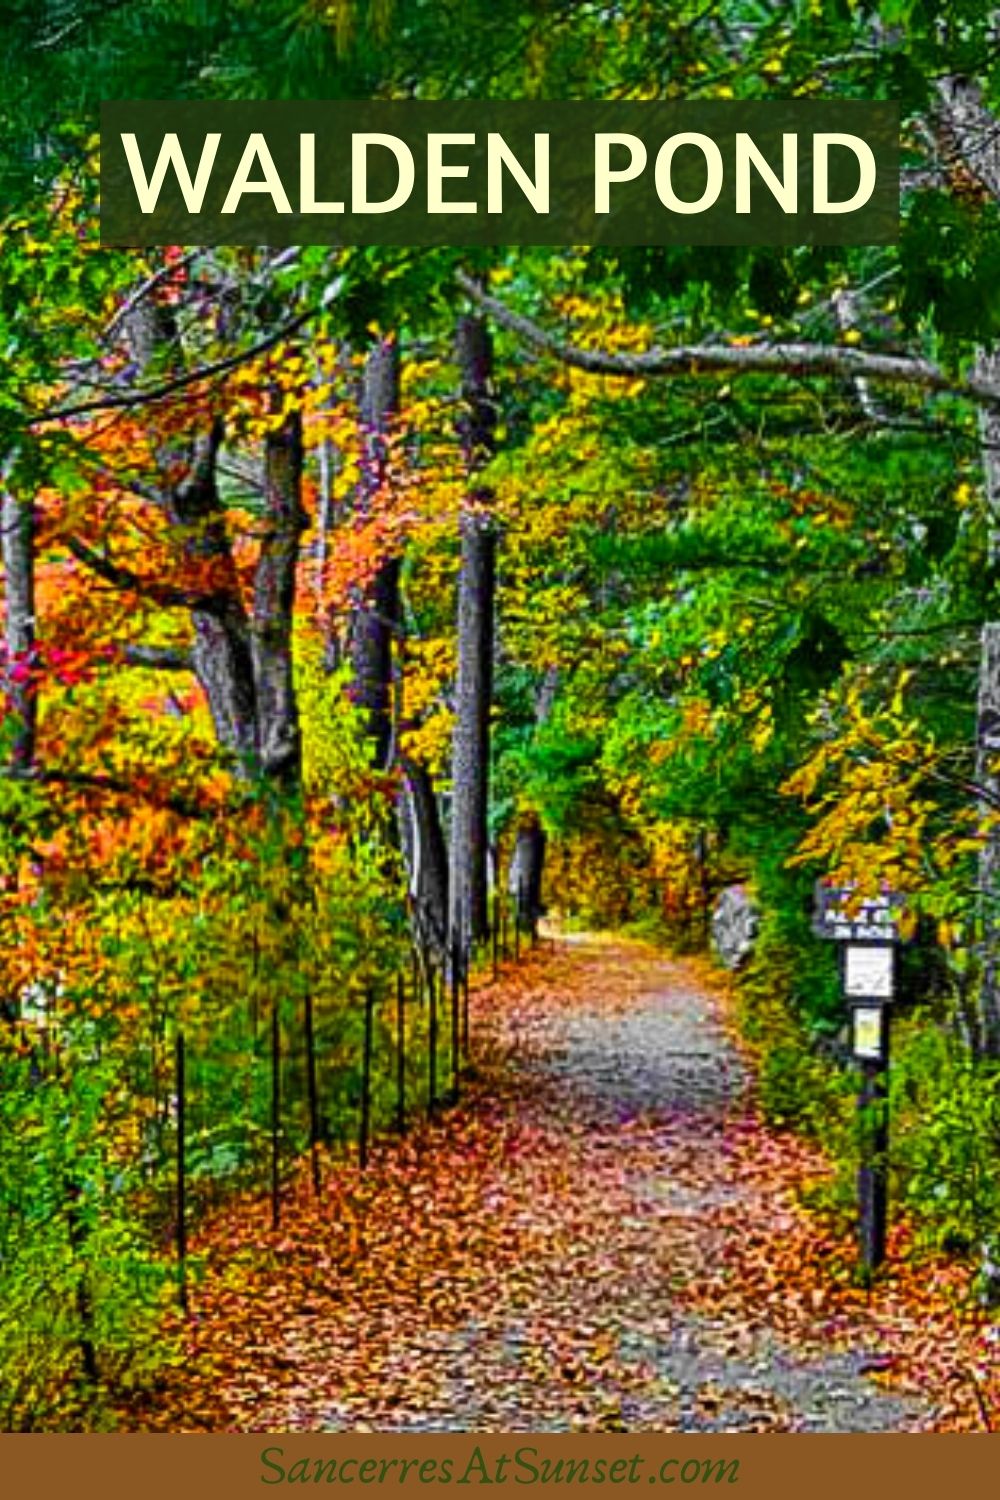 Walden Pond in Concord, Massachusetts